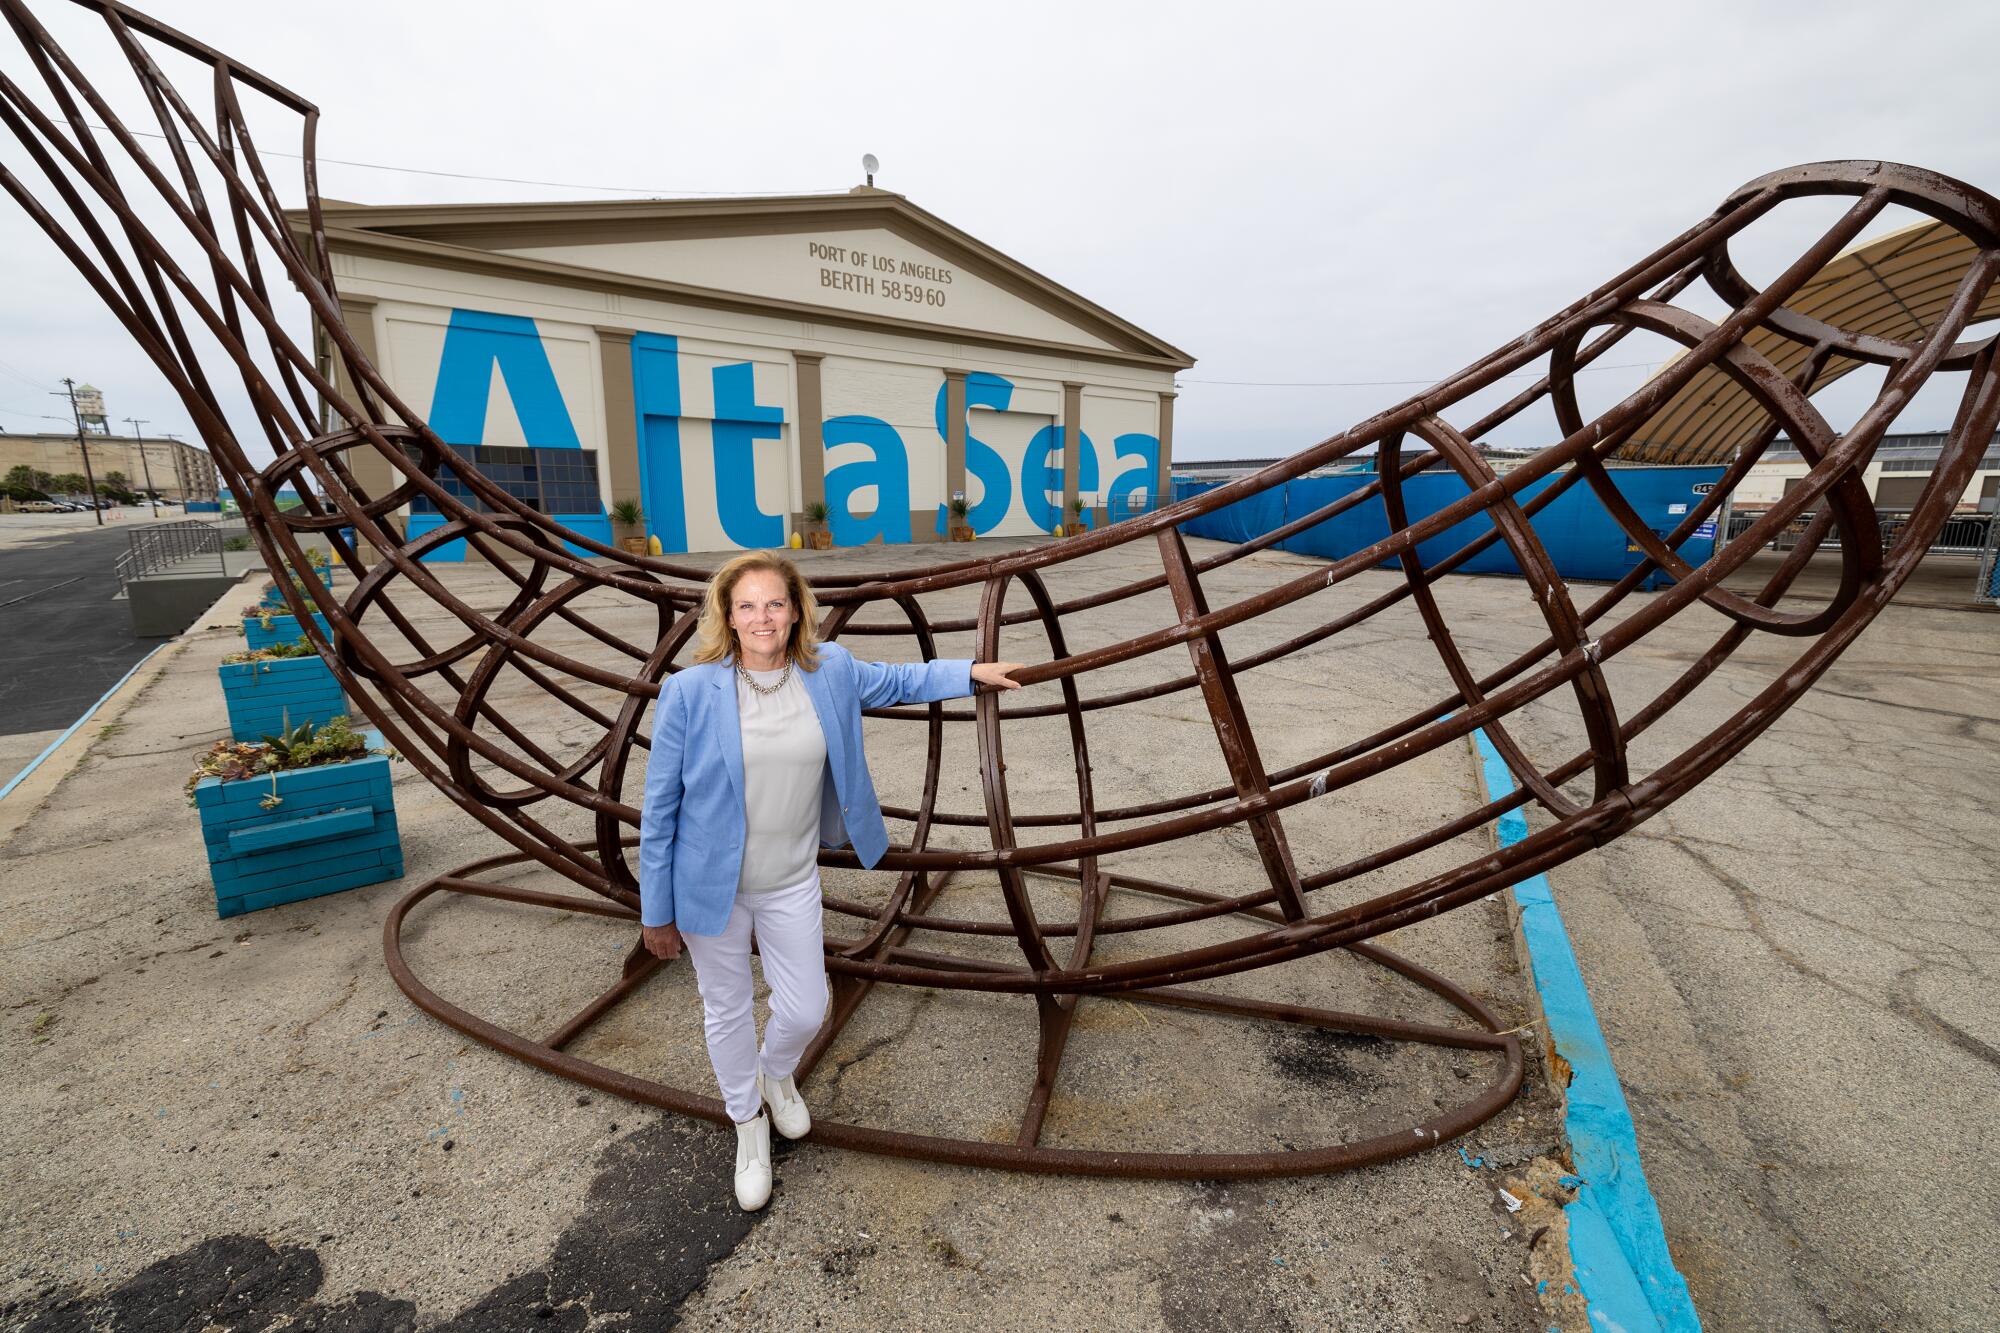 Ocean technology hub AltaSea blooms on San Pedro waterfront